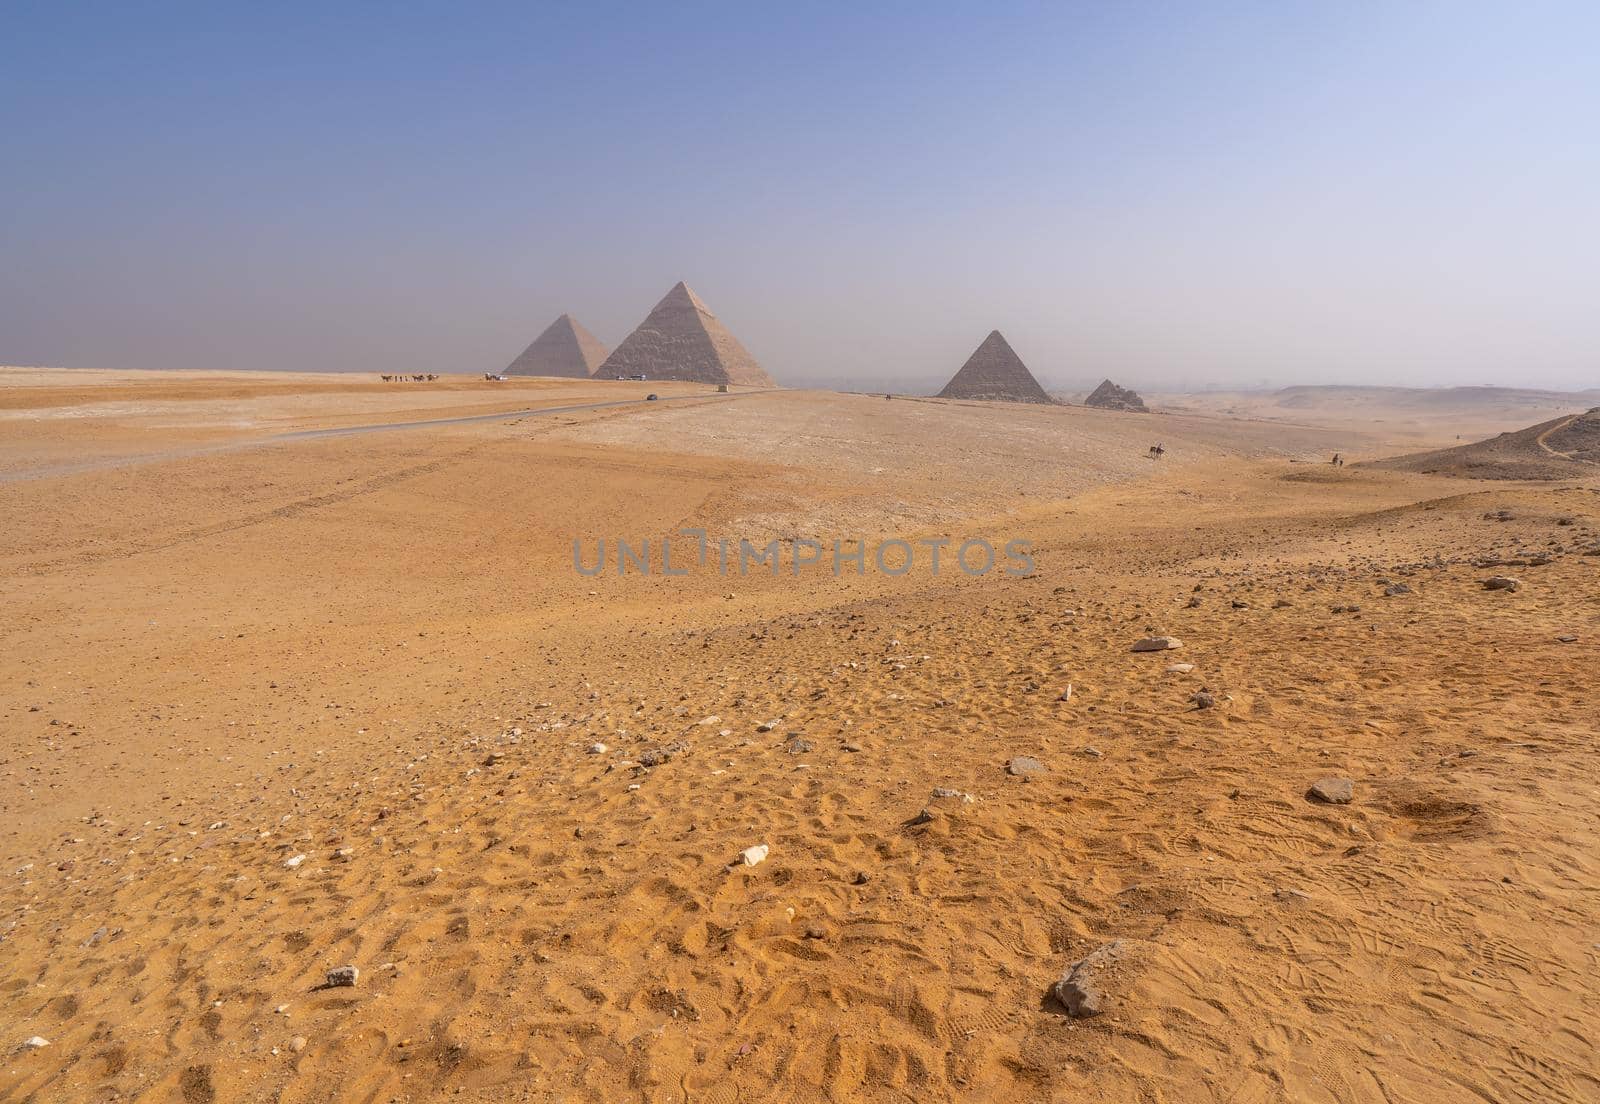 Pyramids of Giza near Cairo Egypt. Wonder of the World in the desert